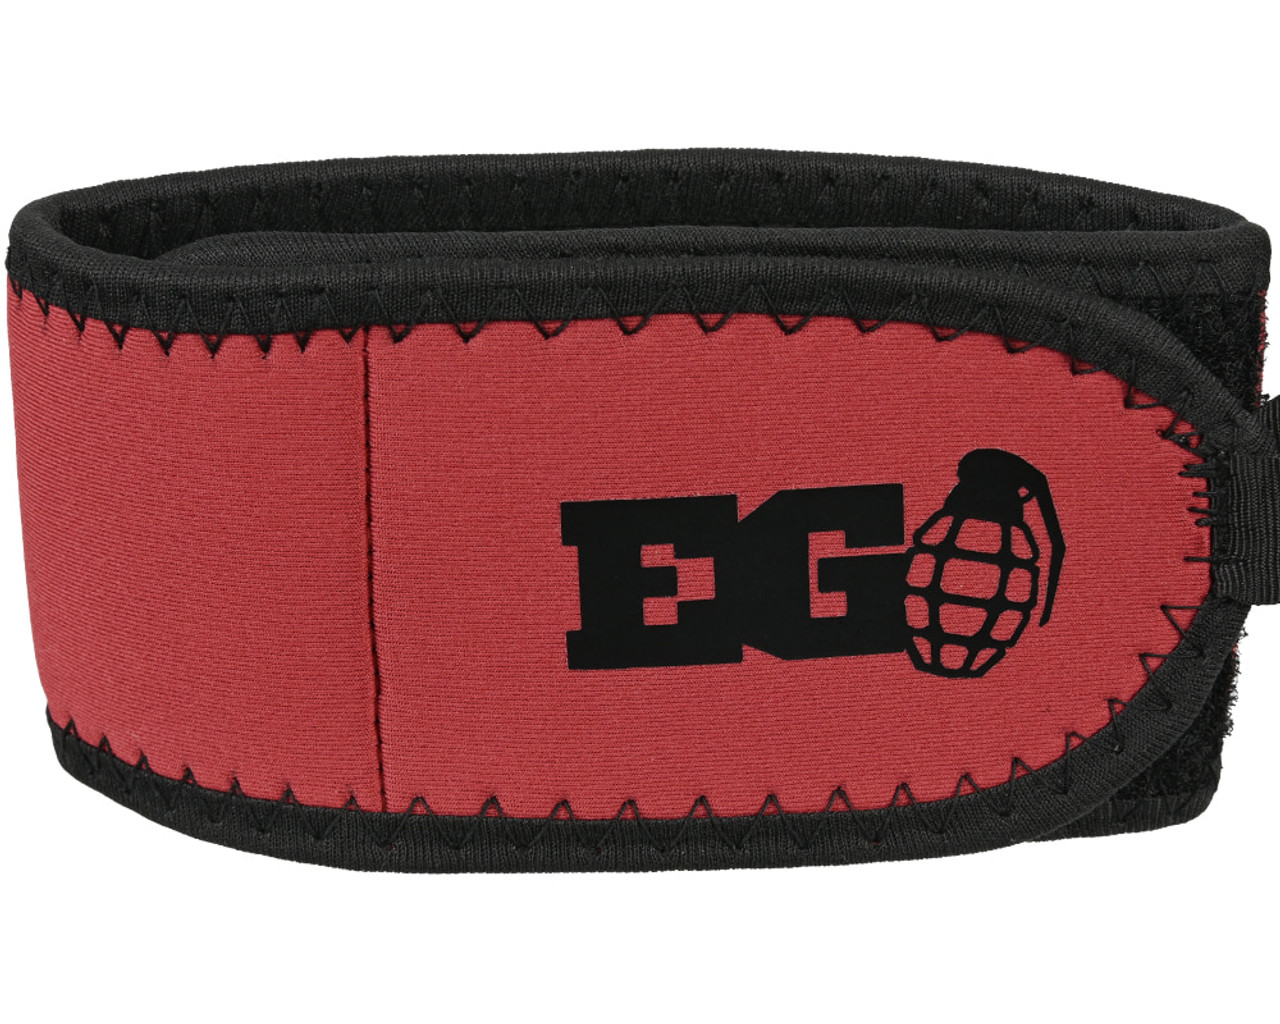 Enola Gaye Team Velcro Armband - Red - ANSgear.com